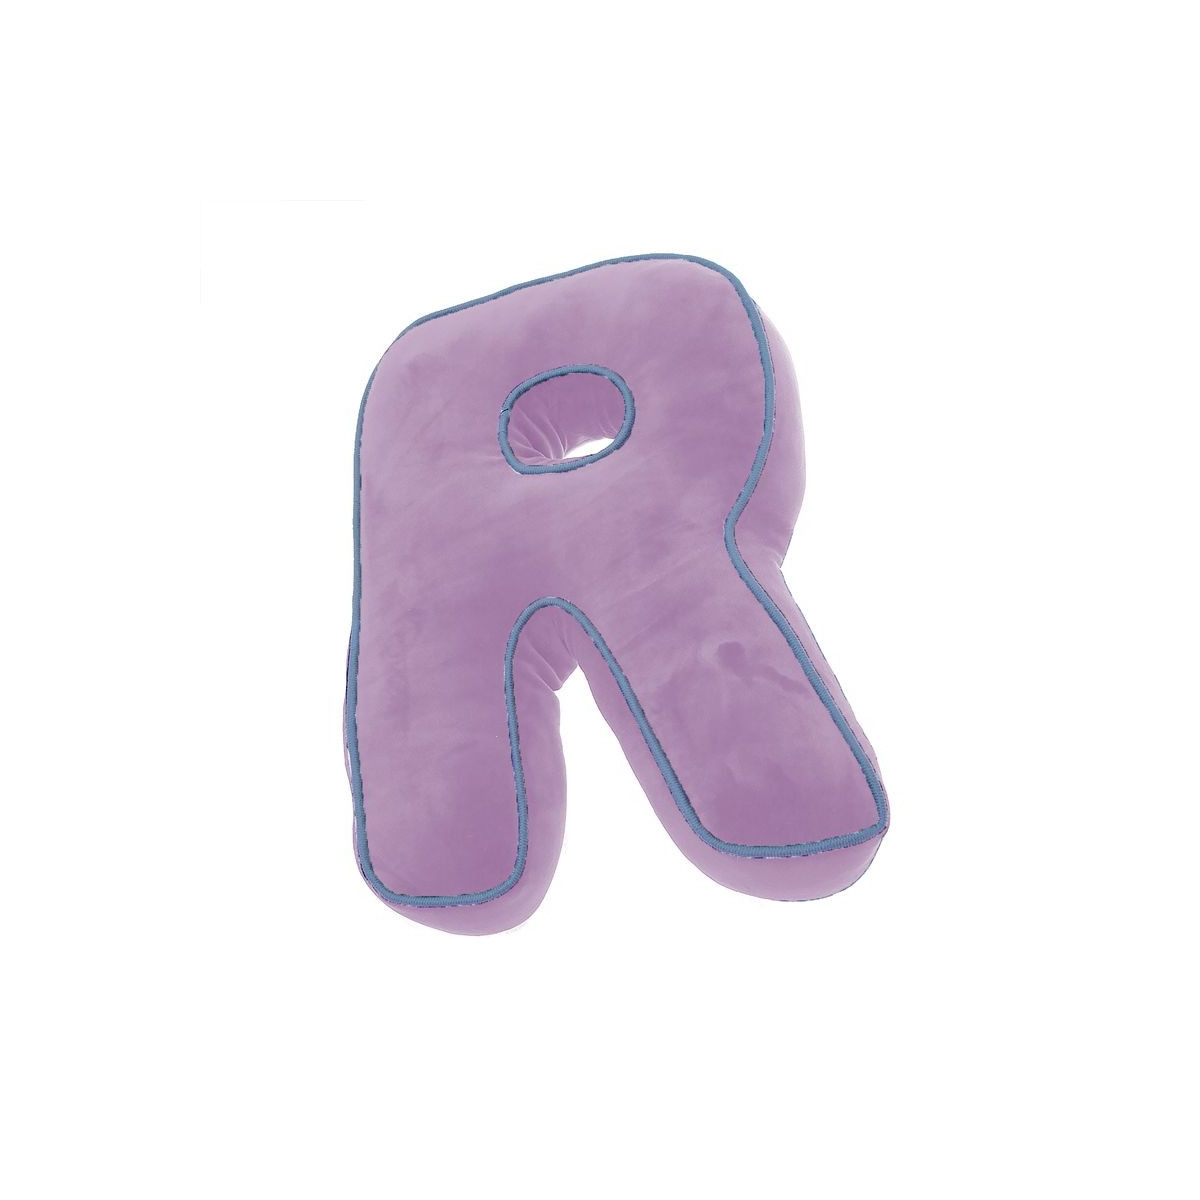 Almofada rosa com letra r